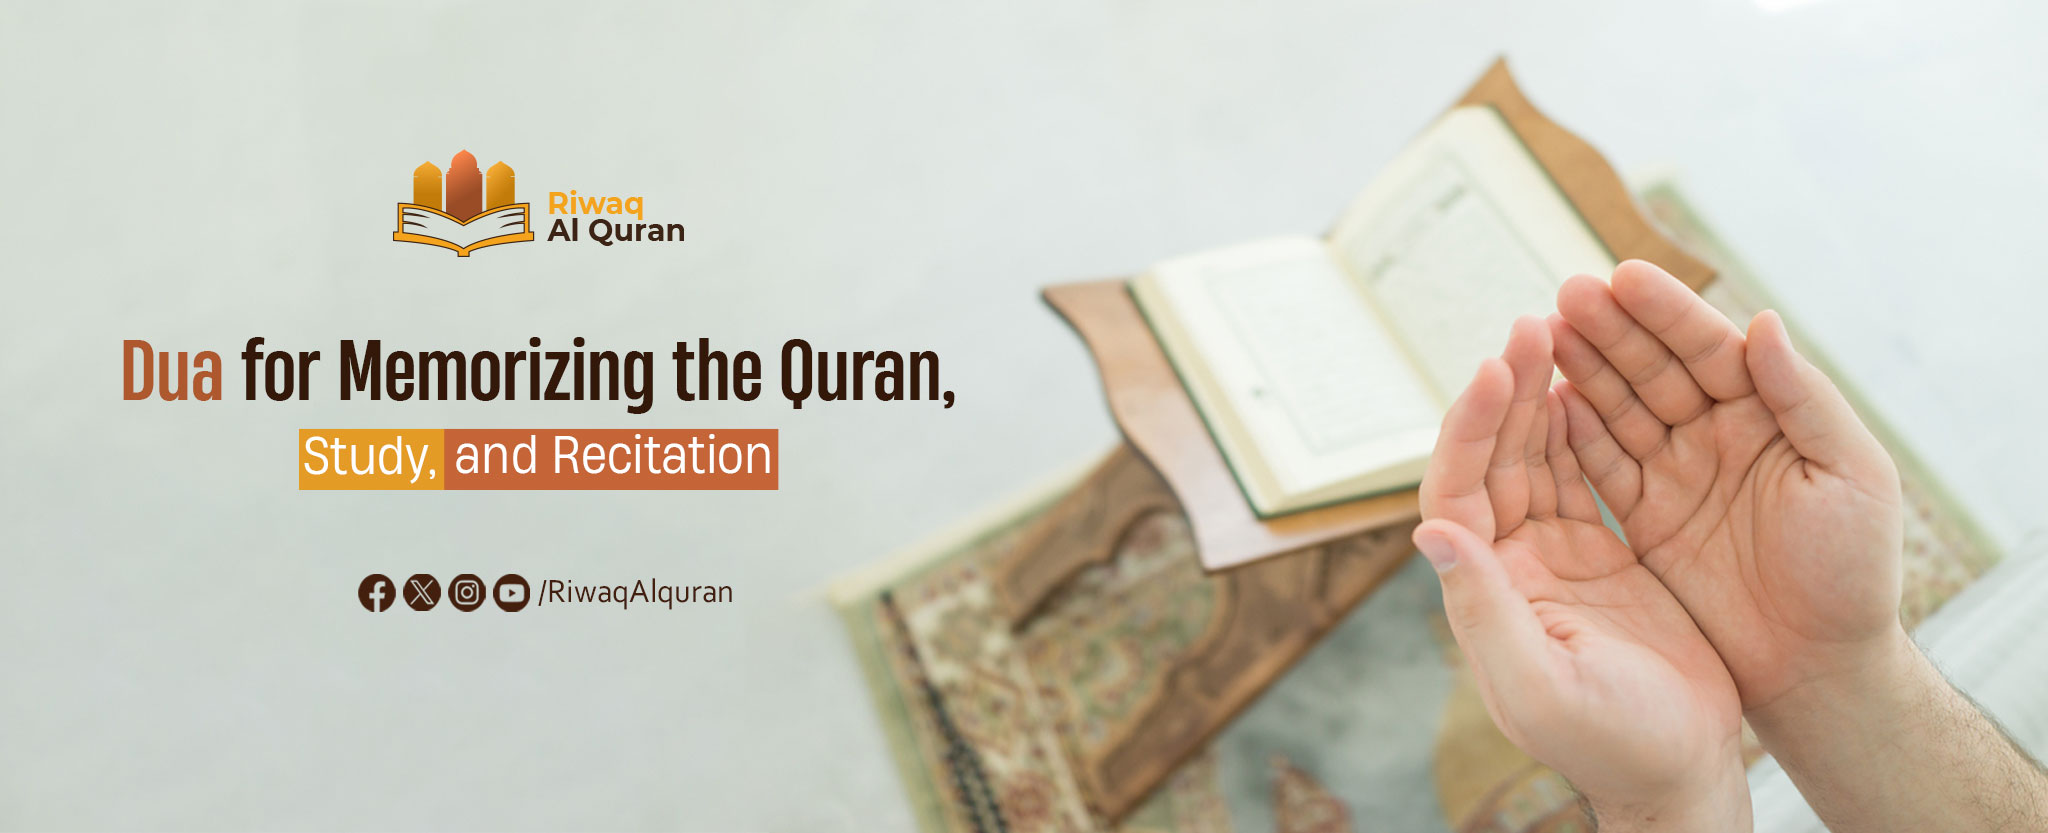 Dua for Memorizing the Quran, Study, and Recitation